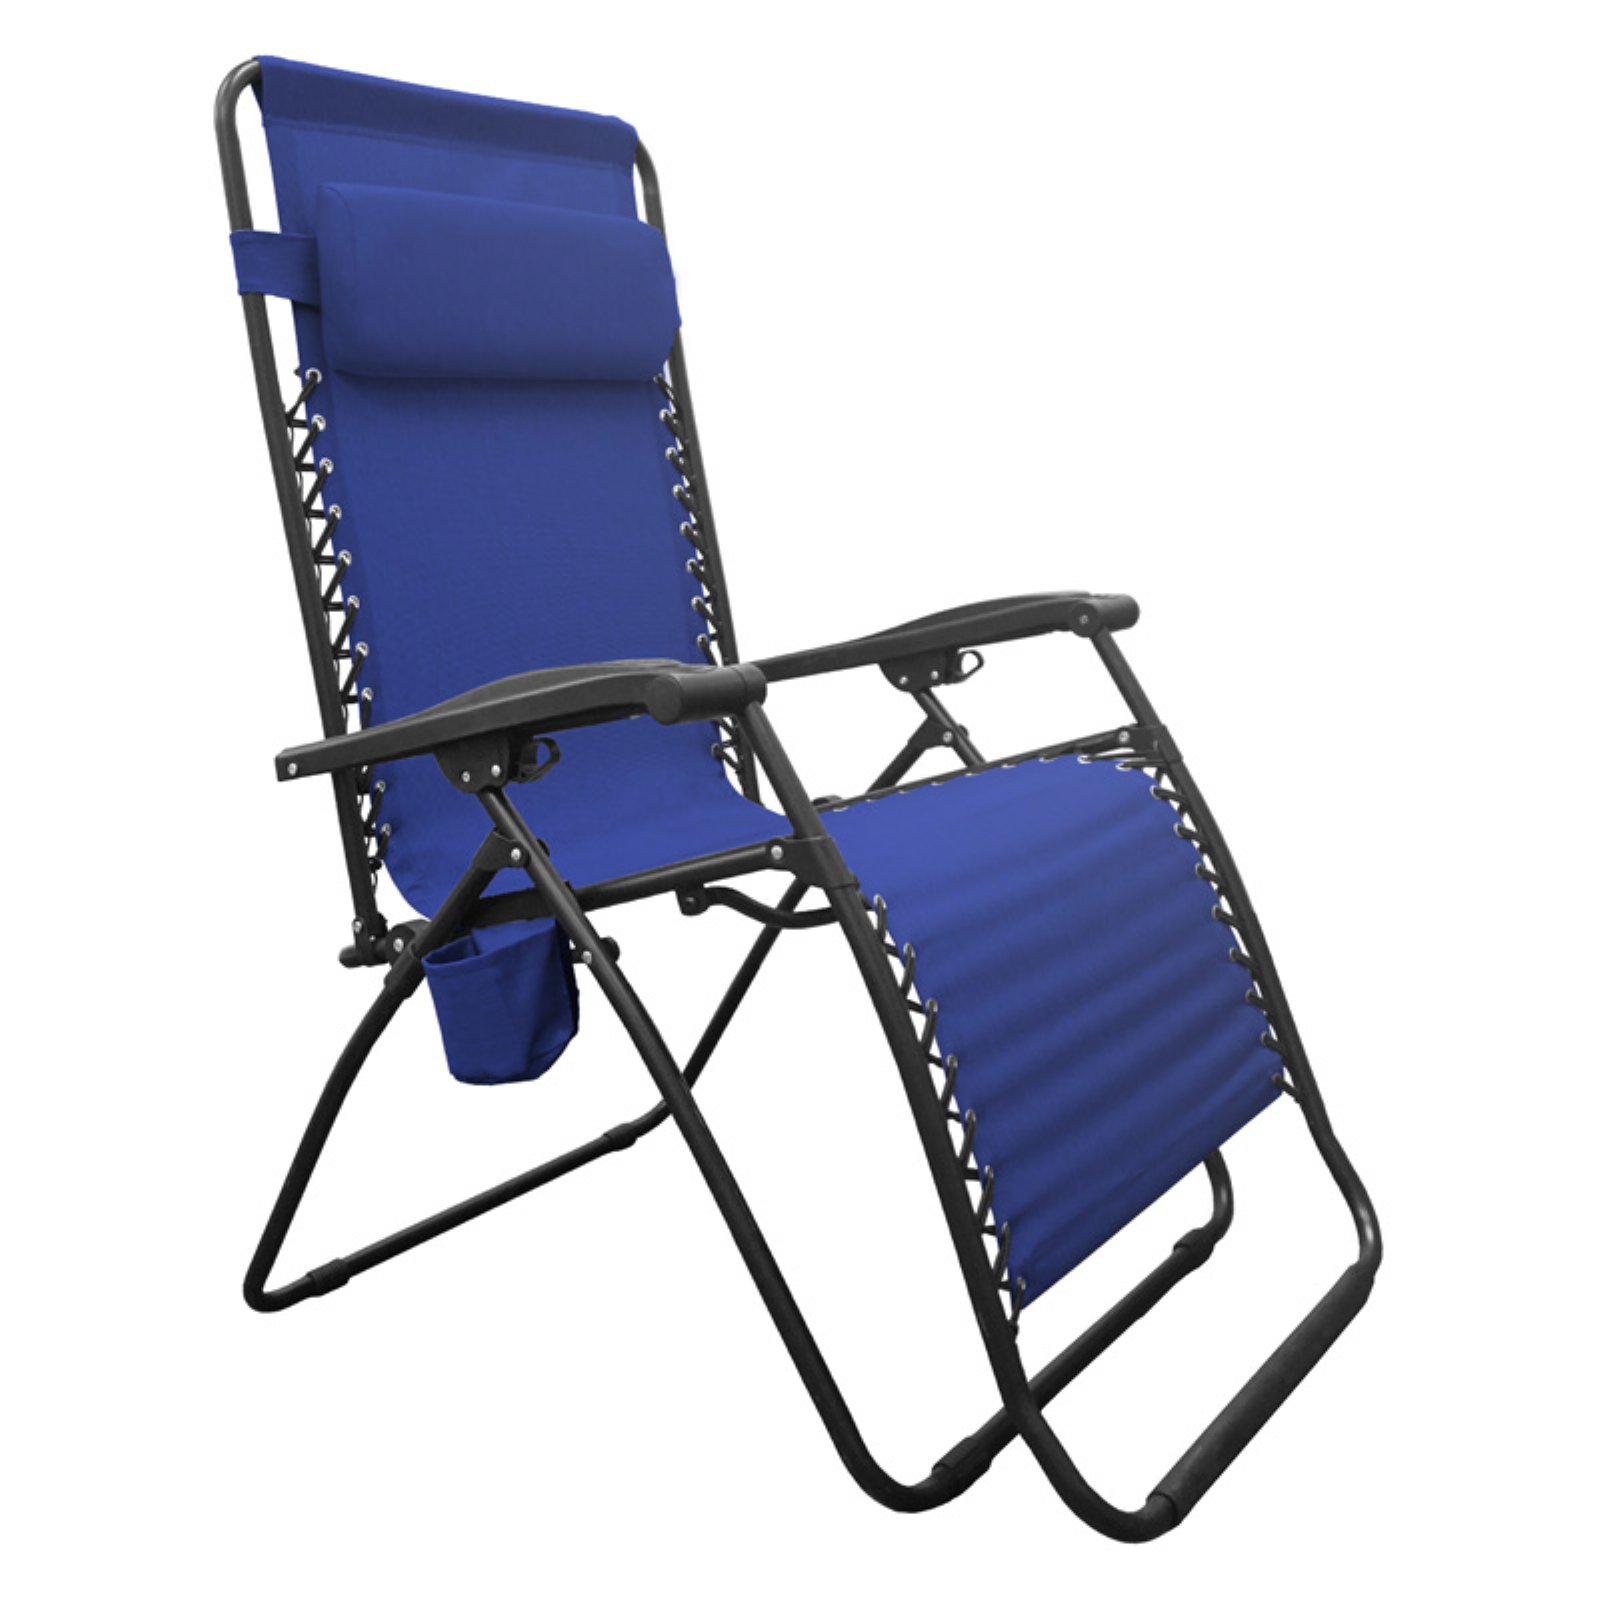 Caravan Sports Infinity Big Boy Zero Gravity Lounge Chair Beige - image 2 of 2